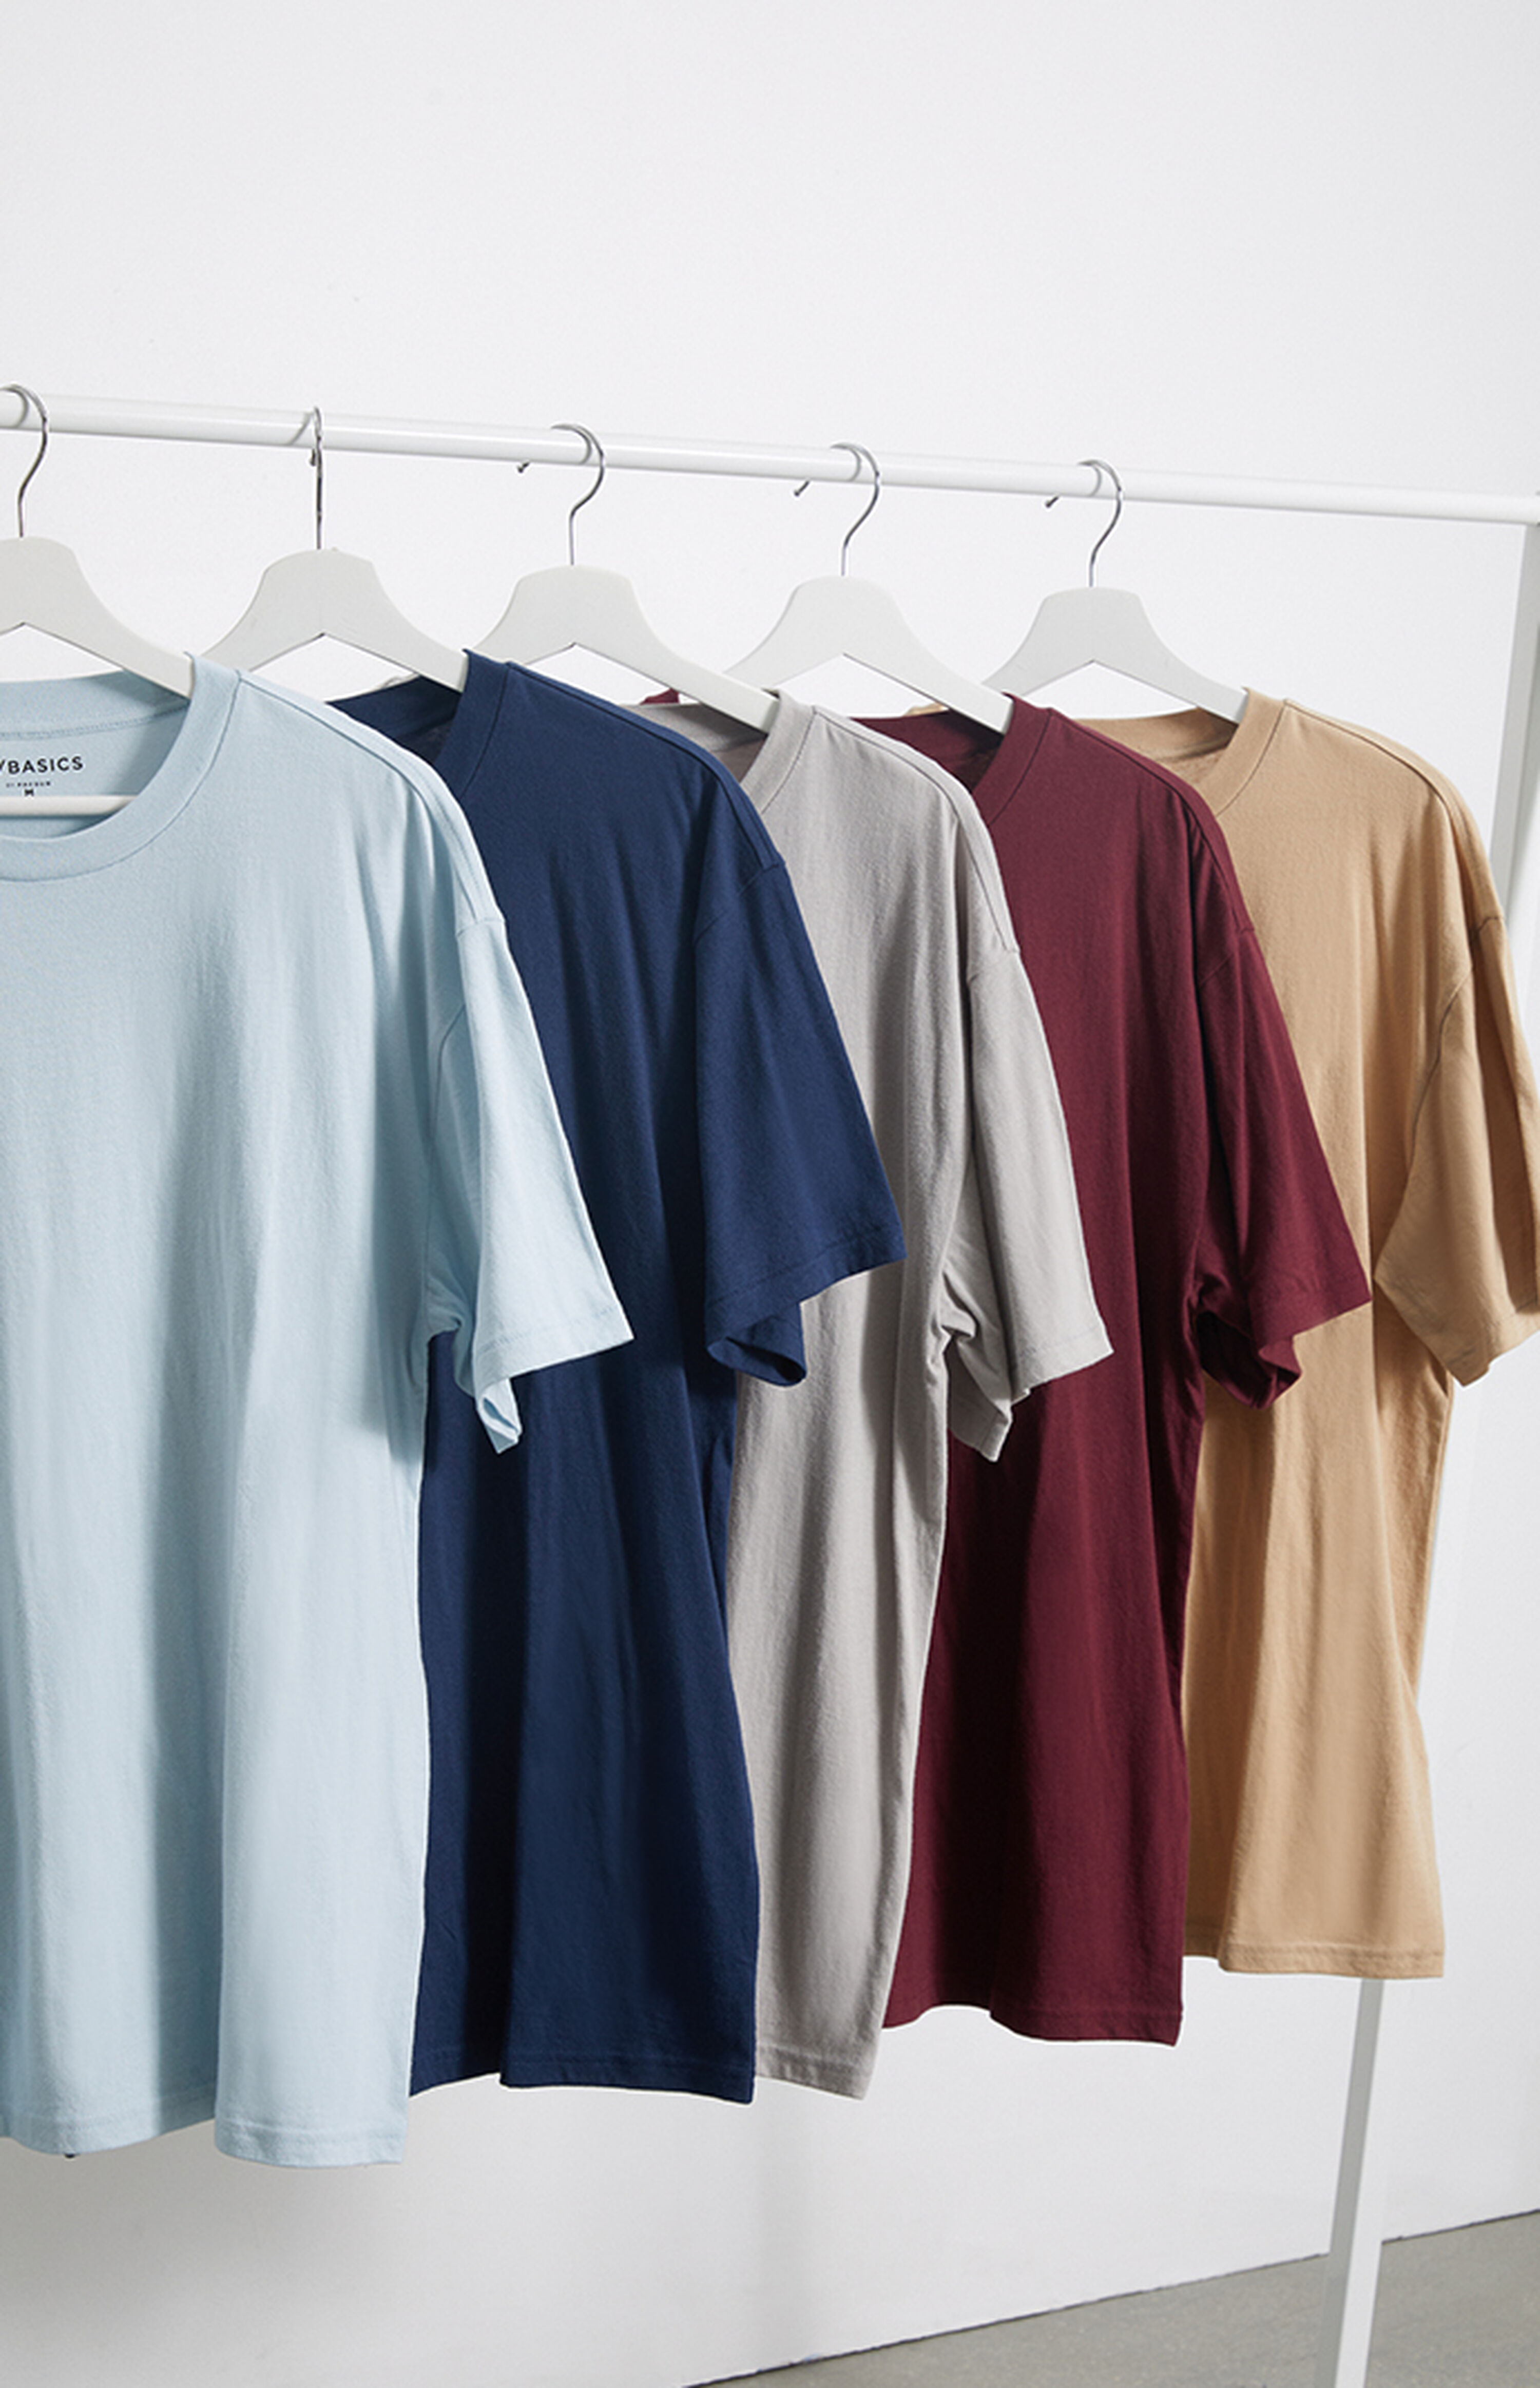 PS Basics 5-Pack Seasonal Regular Fit T-Shirts | PacSun